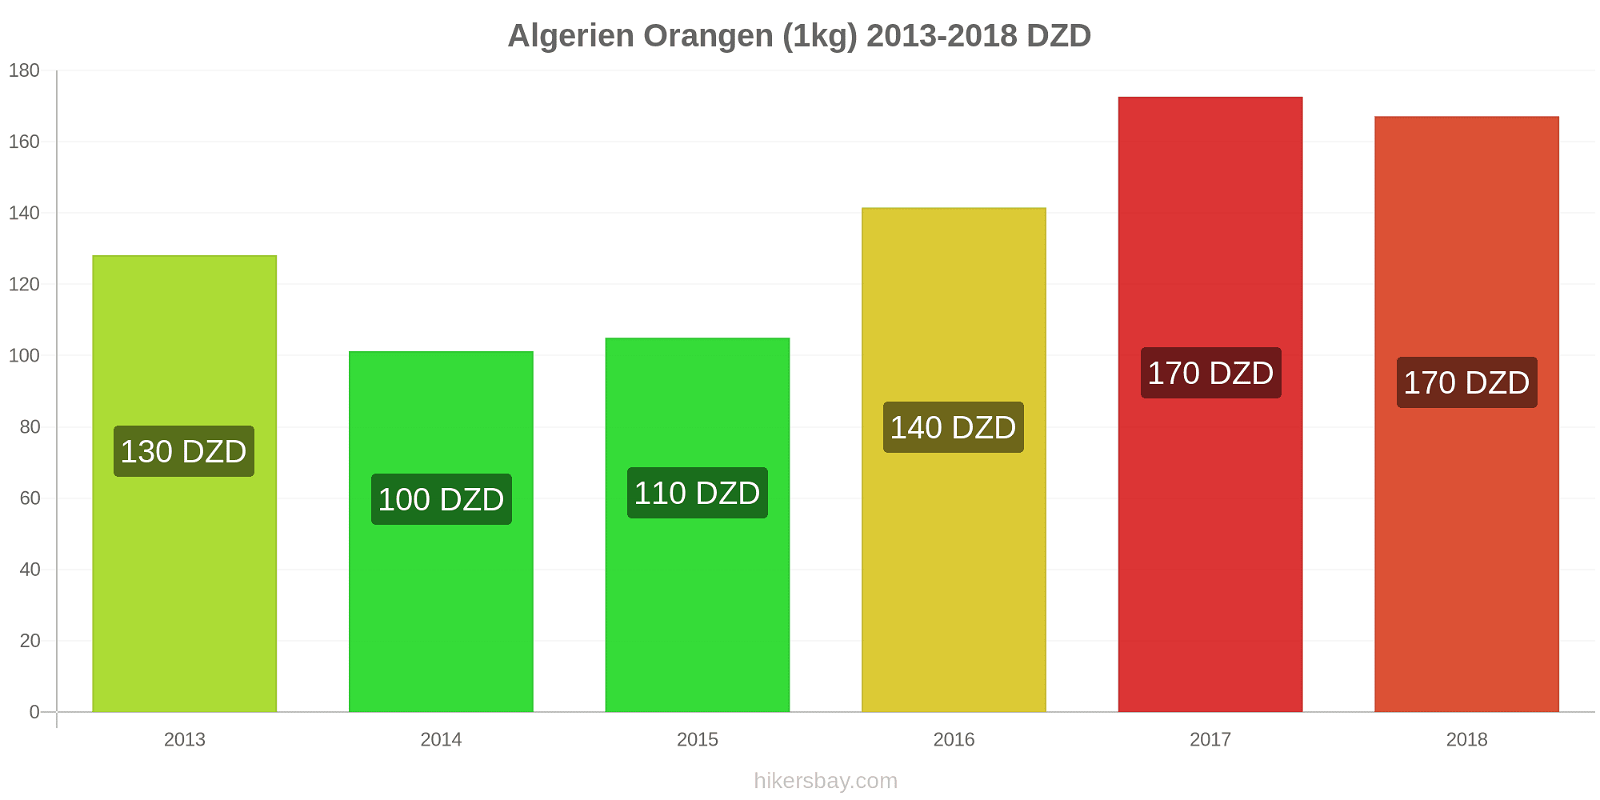 Algerien Preisänderungen Orangen (1kg) hikersbay.com